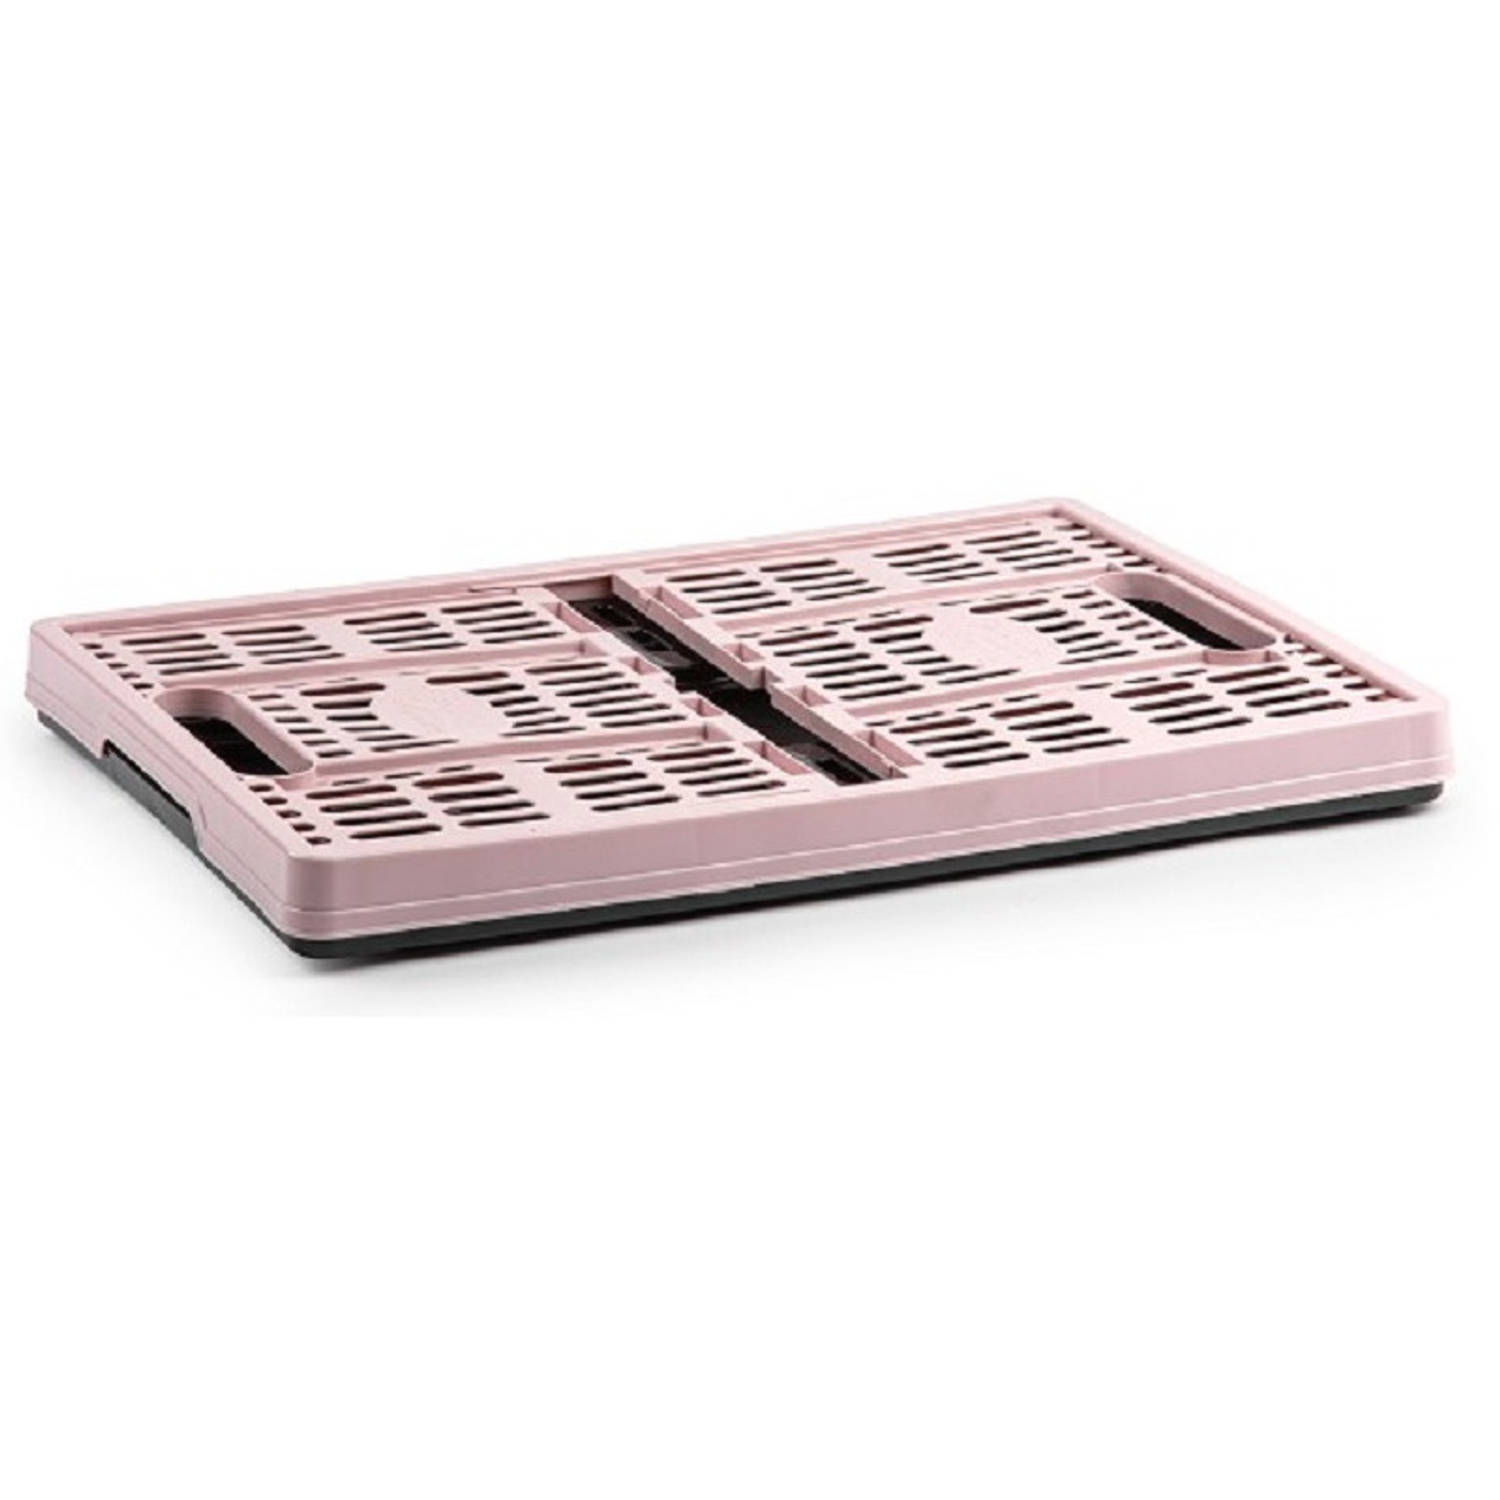 Forte Plastics 2x stuks boodschappen kratten opvouwbaar zwart/roze 48 35 x 24 cm - Boodschappenkratten | Blokker